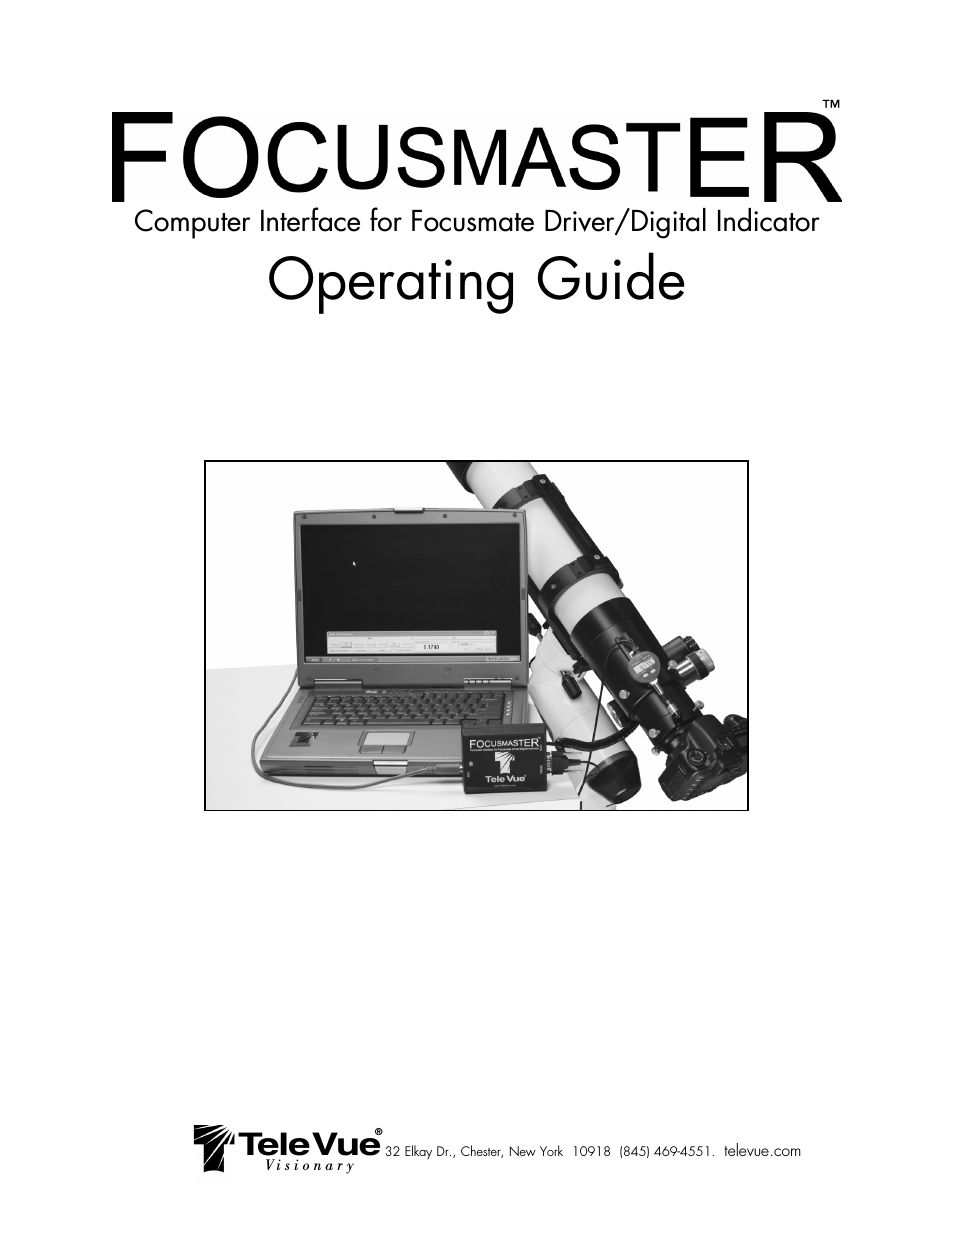 Focusmaster